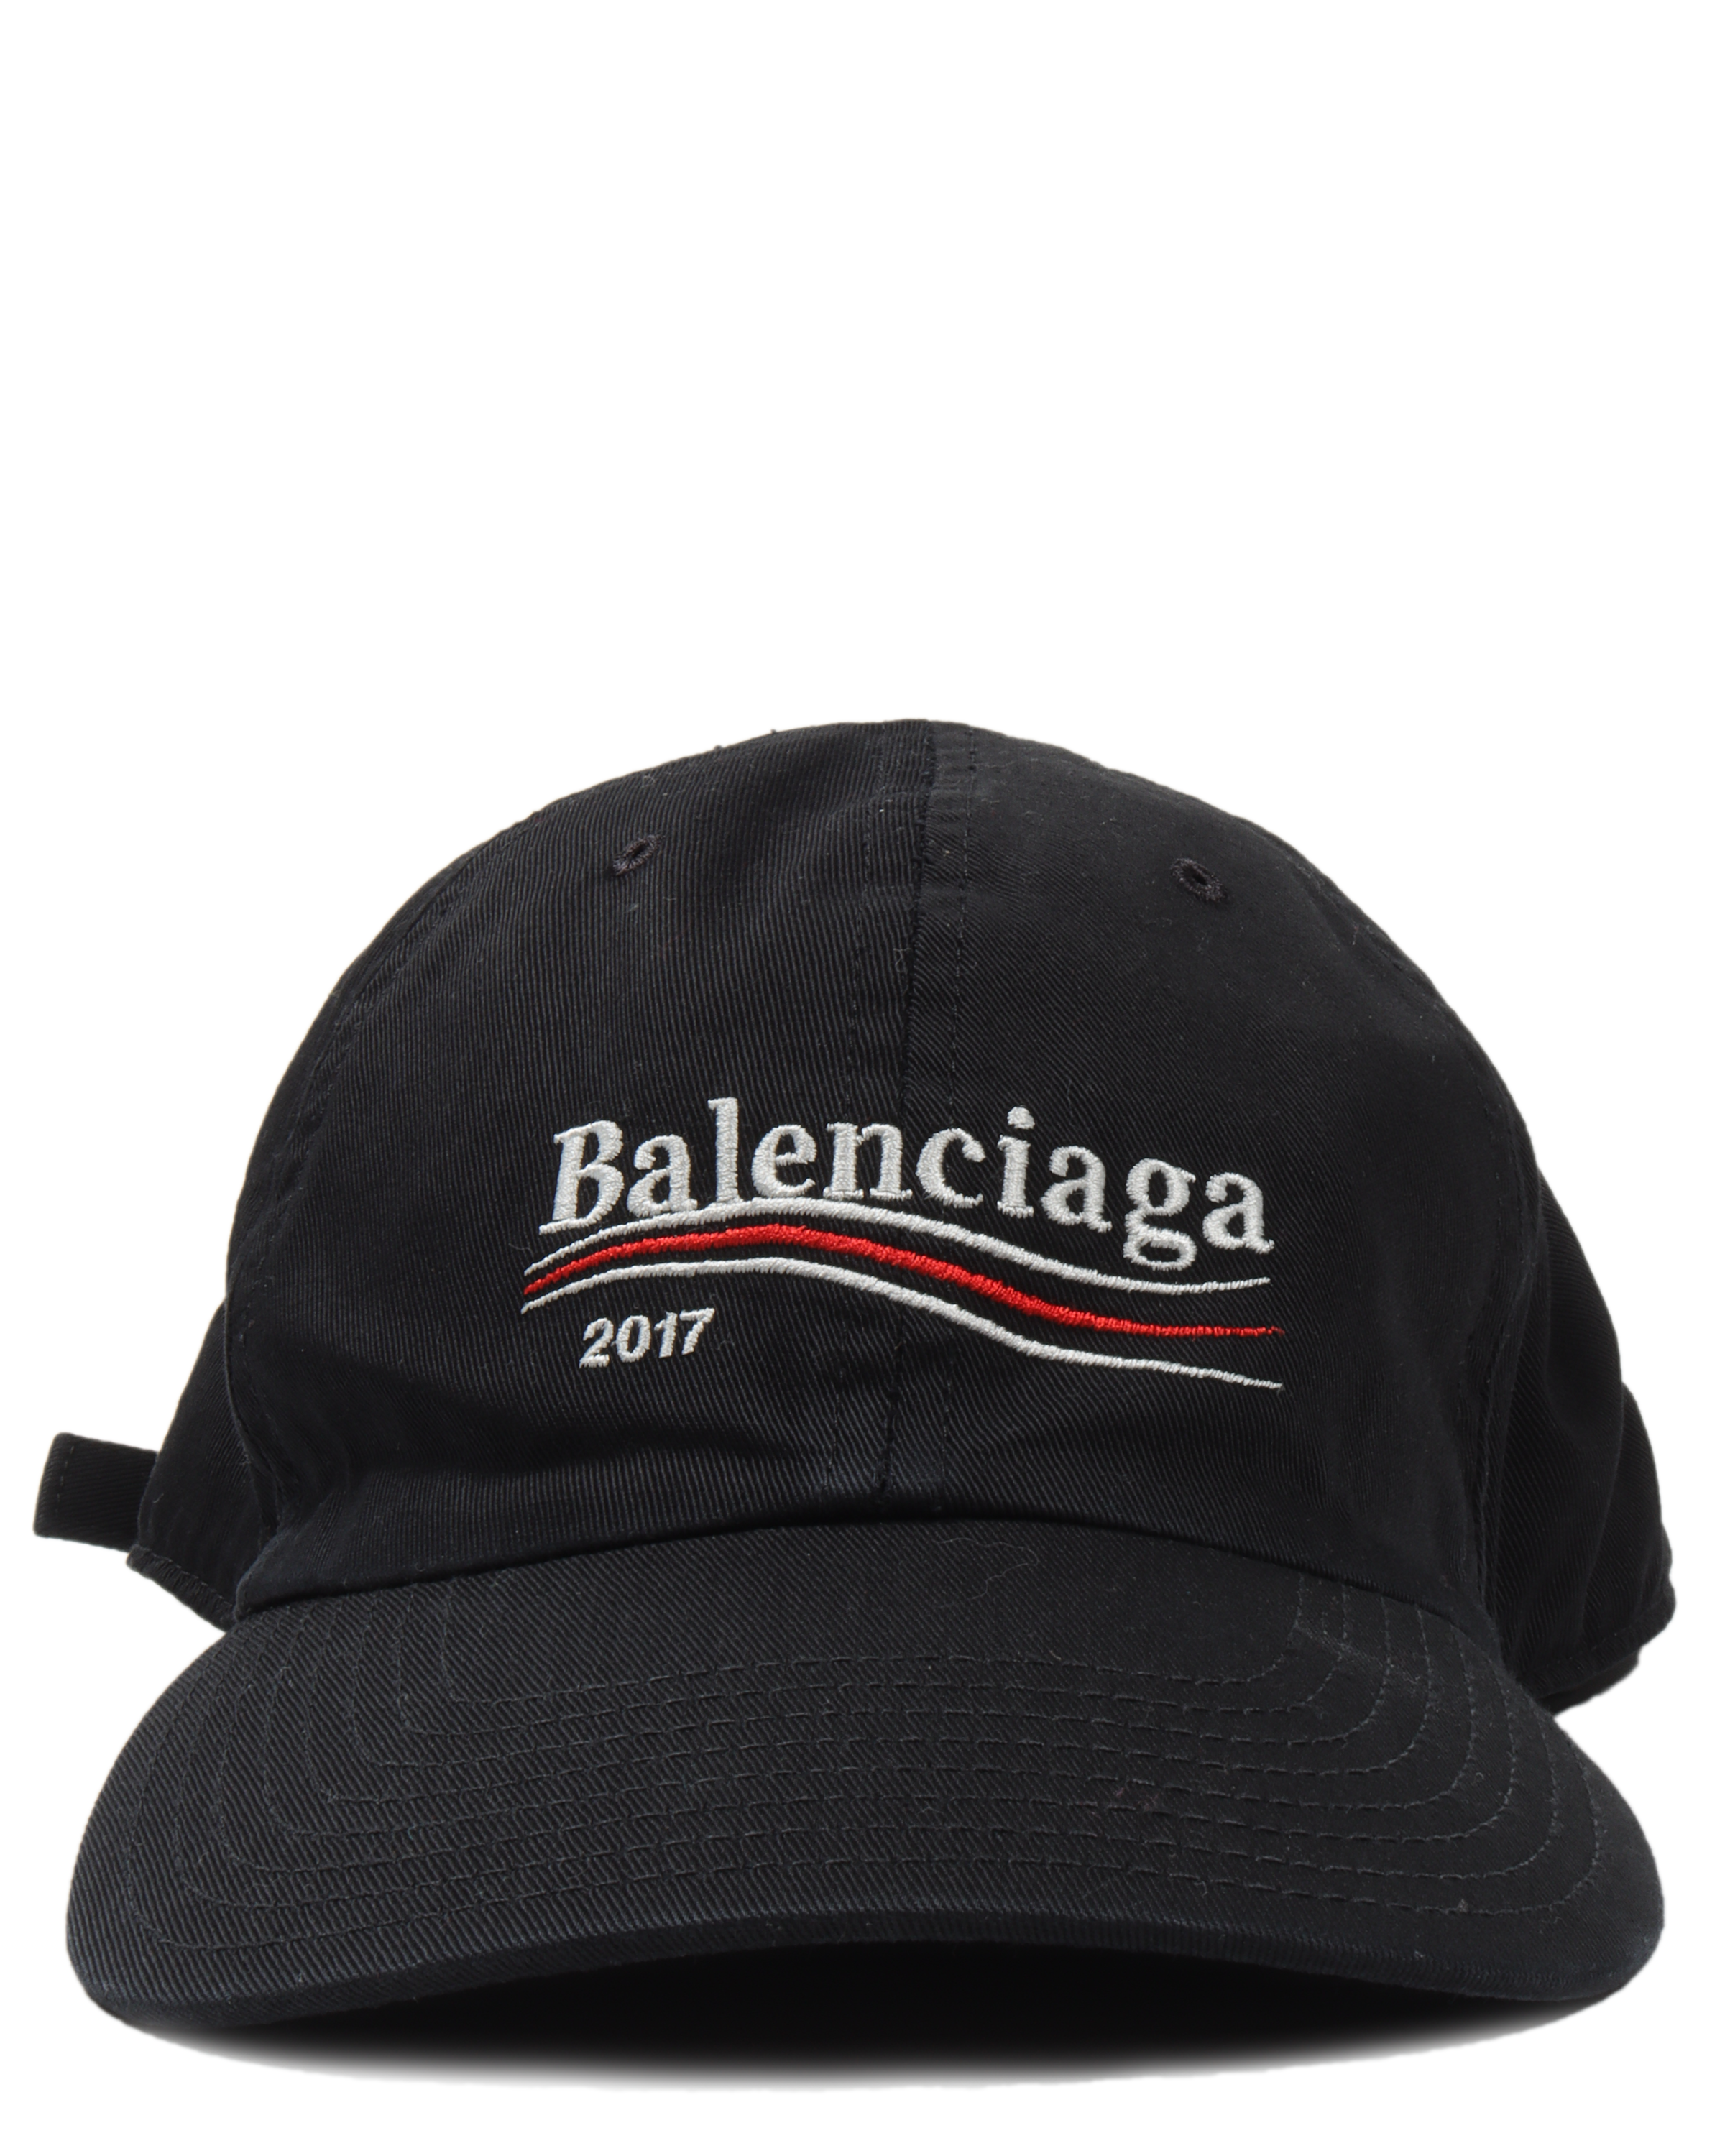 Afstemning gambling mount Balenciaga Political Campaign Logo Cap | escapeauthority.com